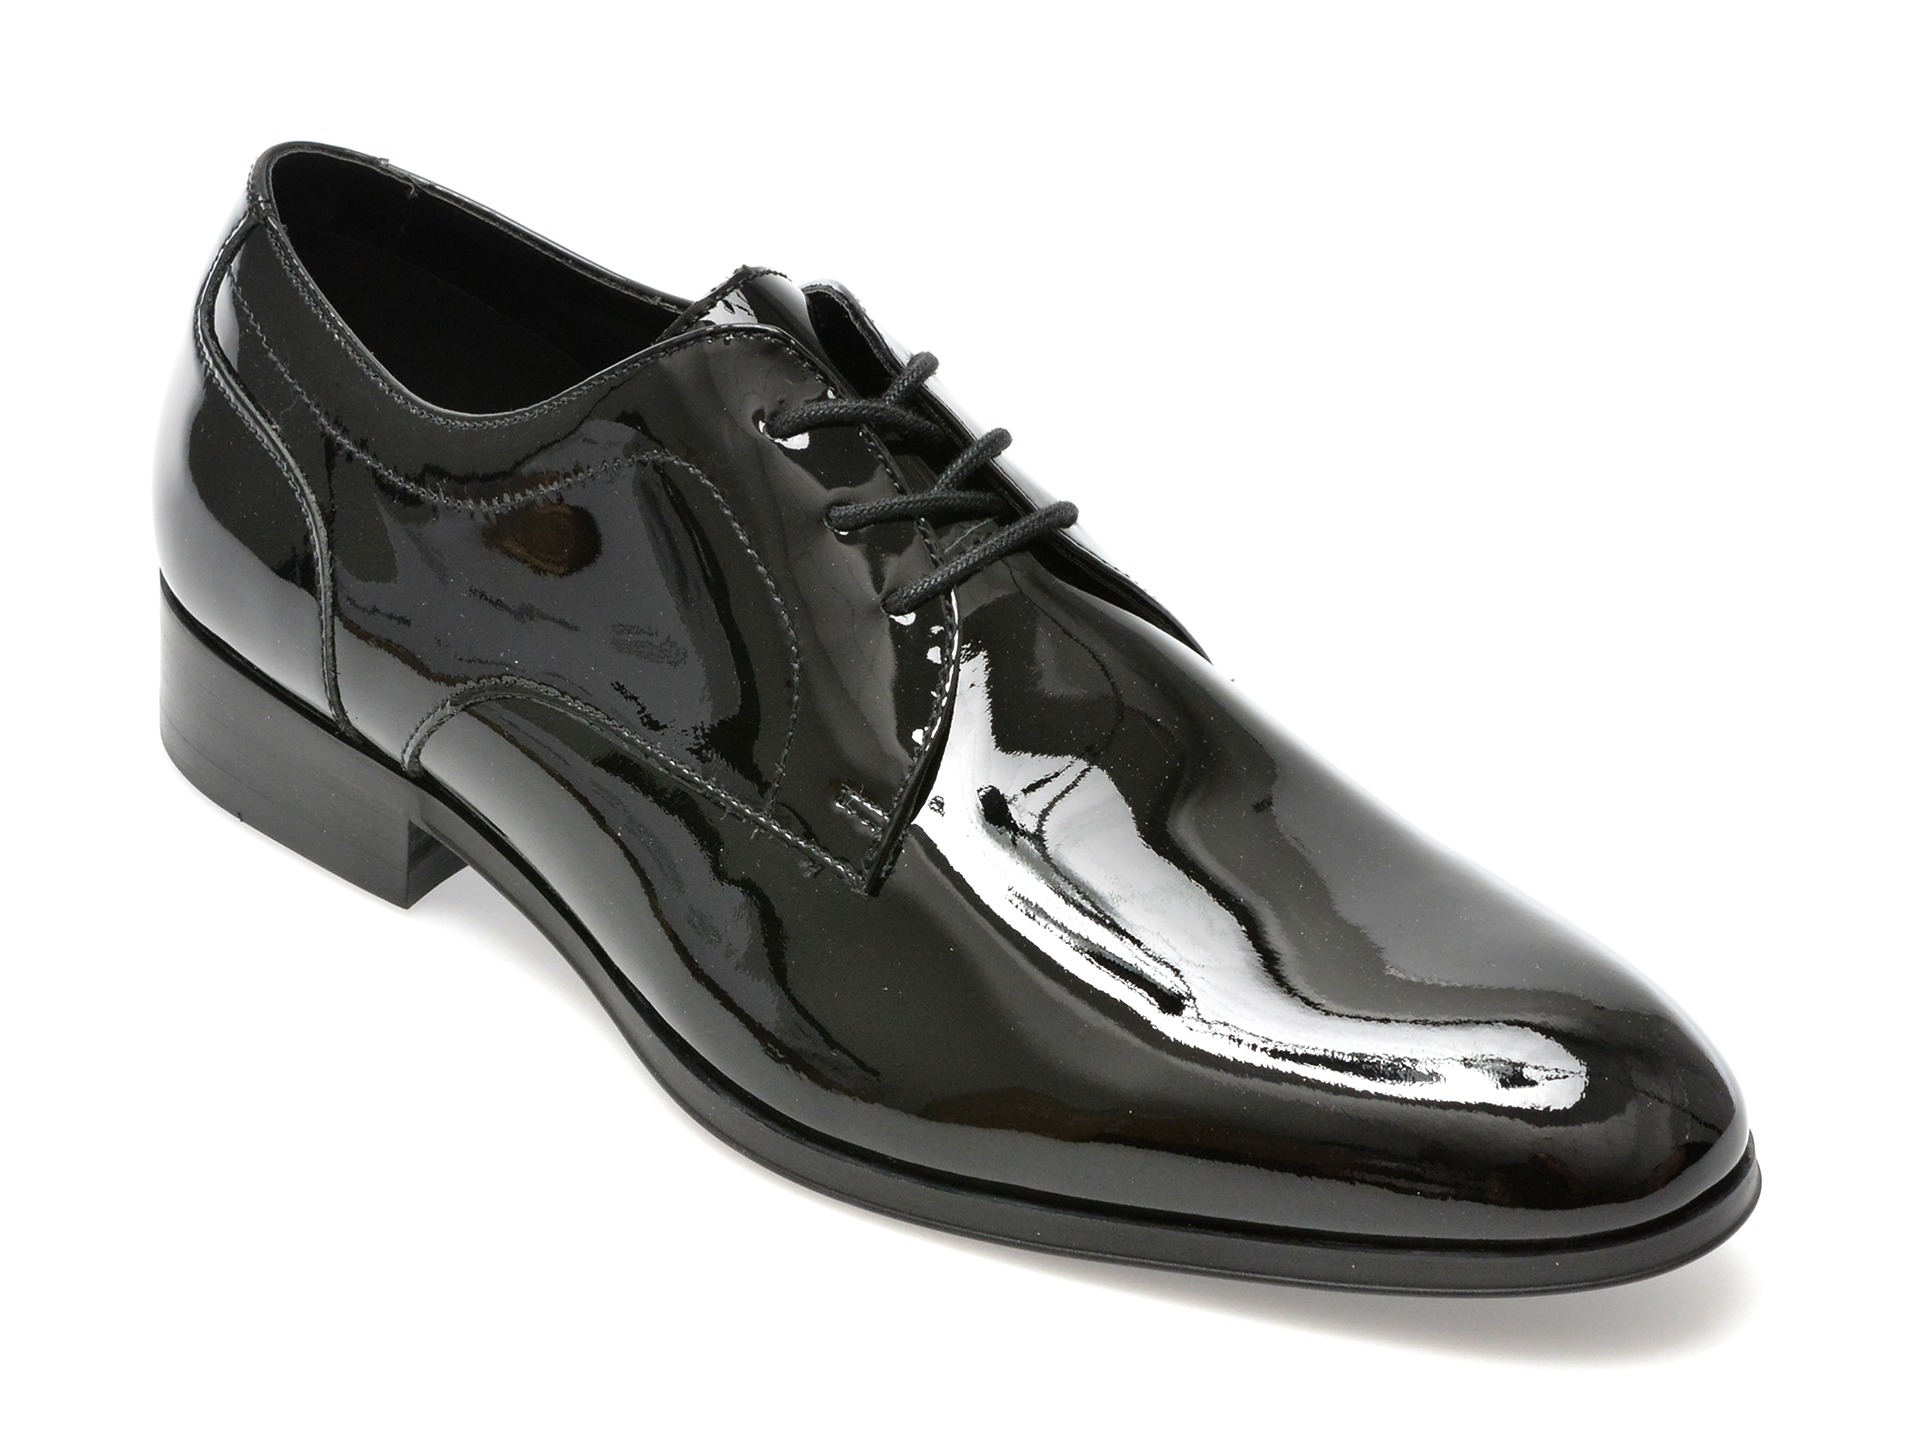 Pantofi eleganti ALDO negri, KINGSLEY004, din piele naturala lacuita